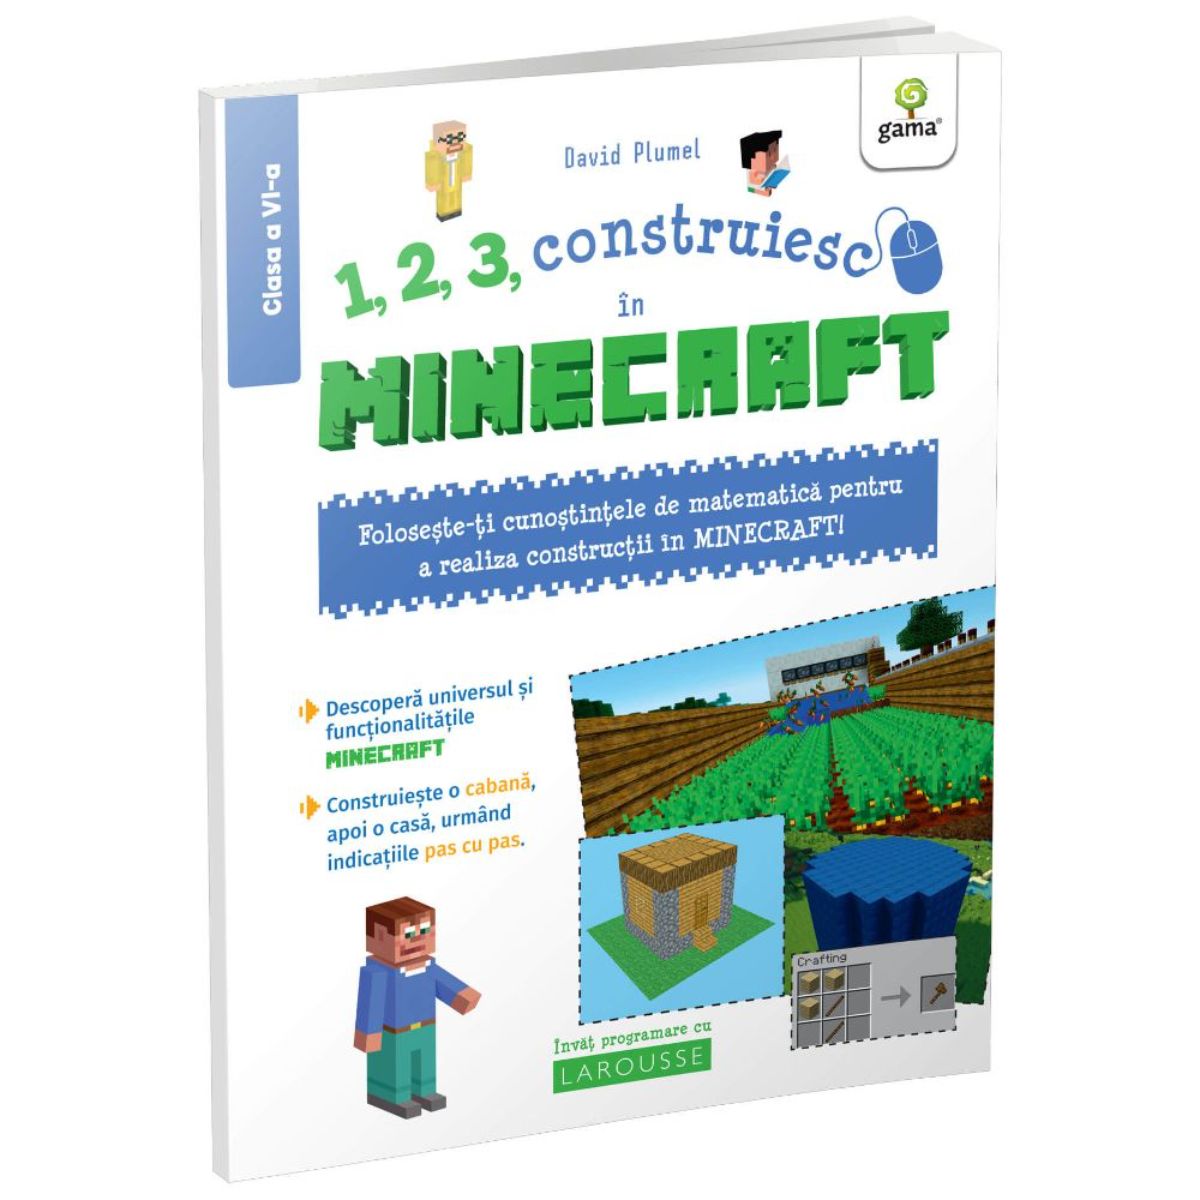 1, 2, 3 construiesc in Minecraft, Programez cu Larousse, David Plumel